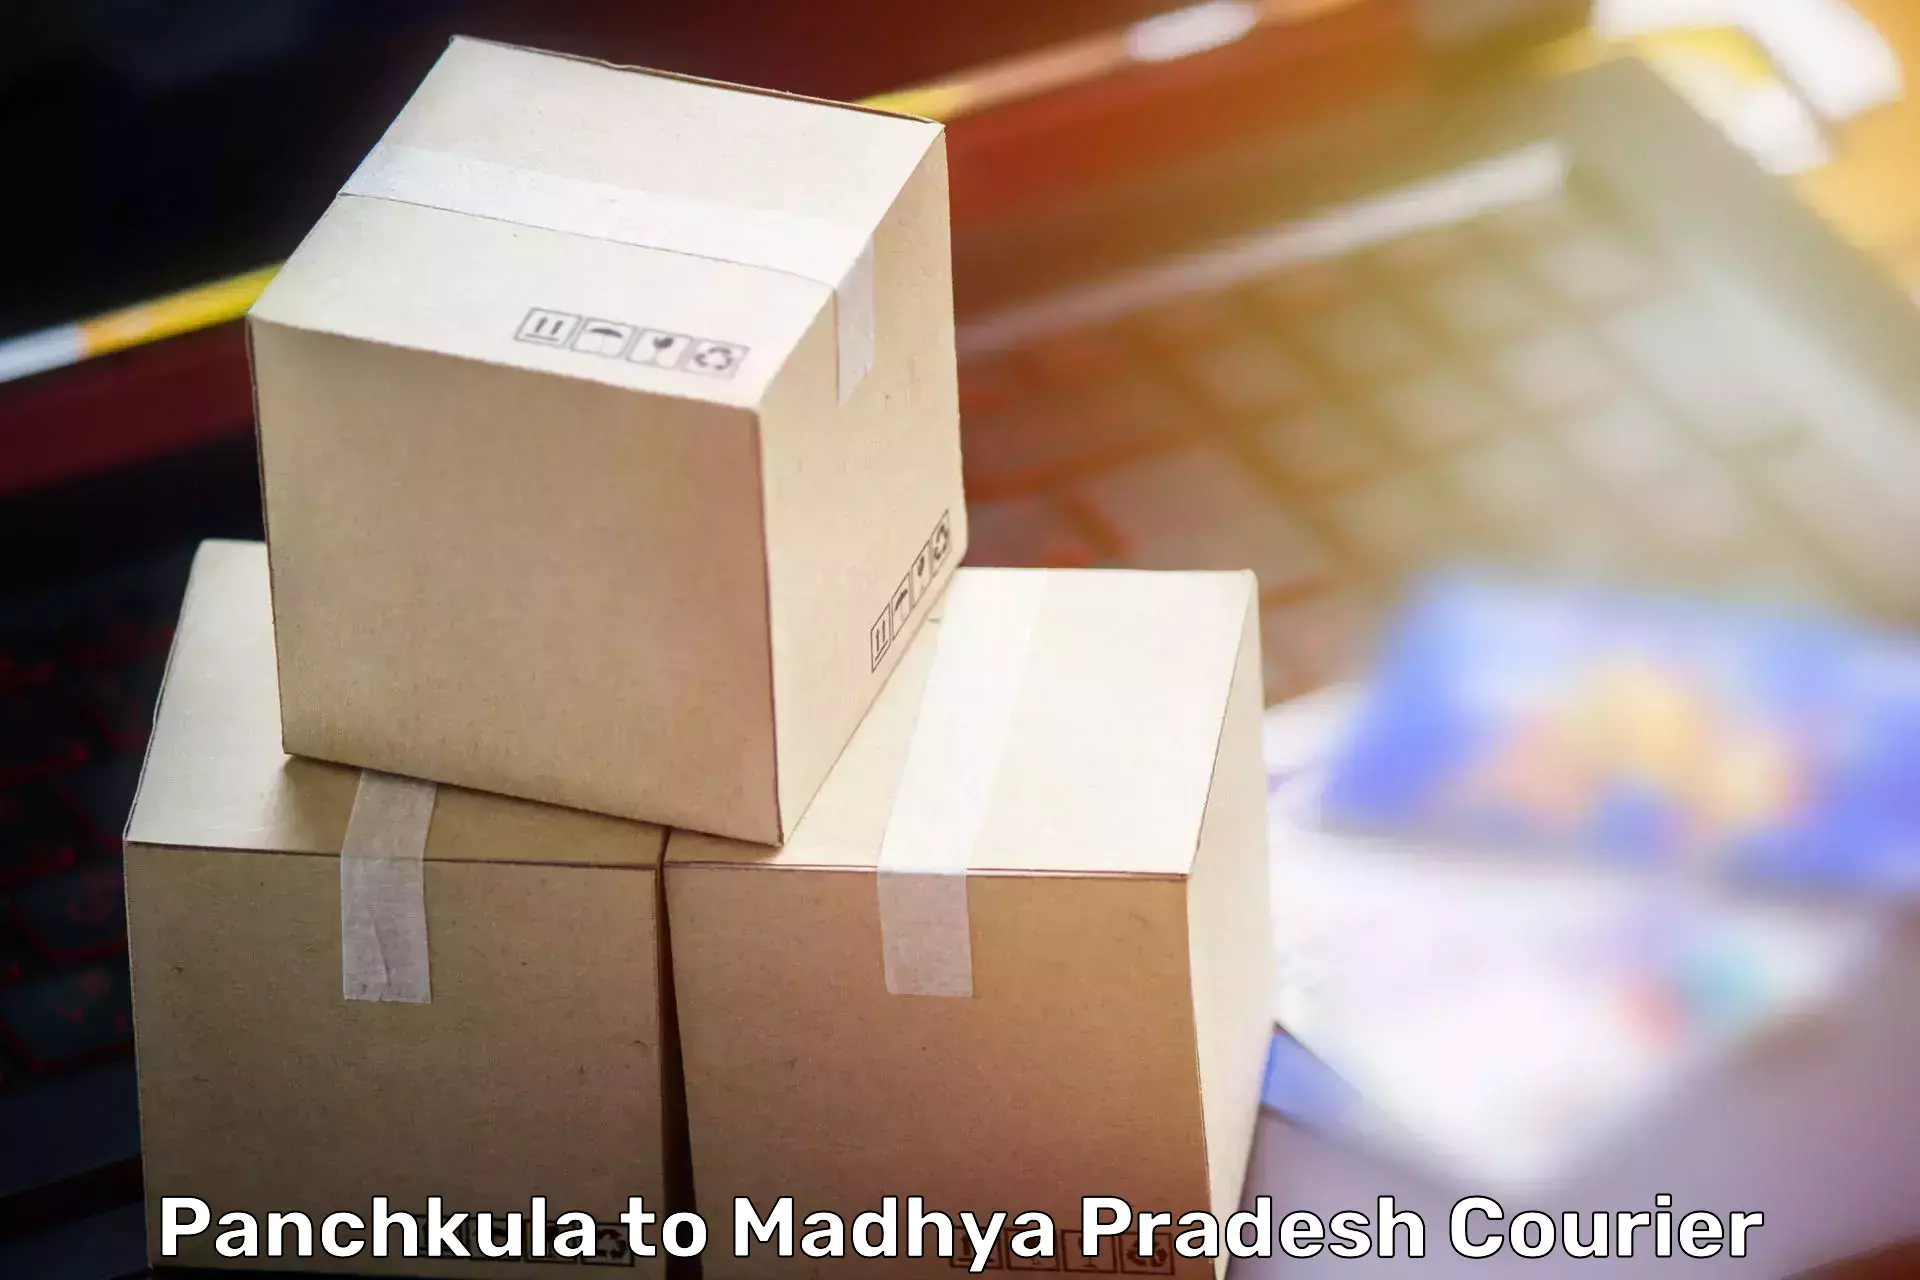 Furniture delivery service Panchkula to Katni